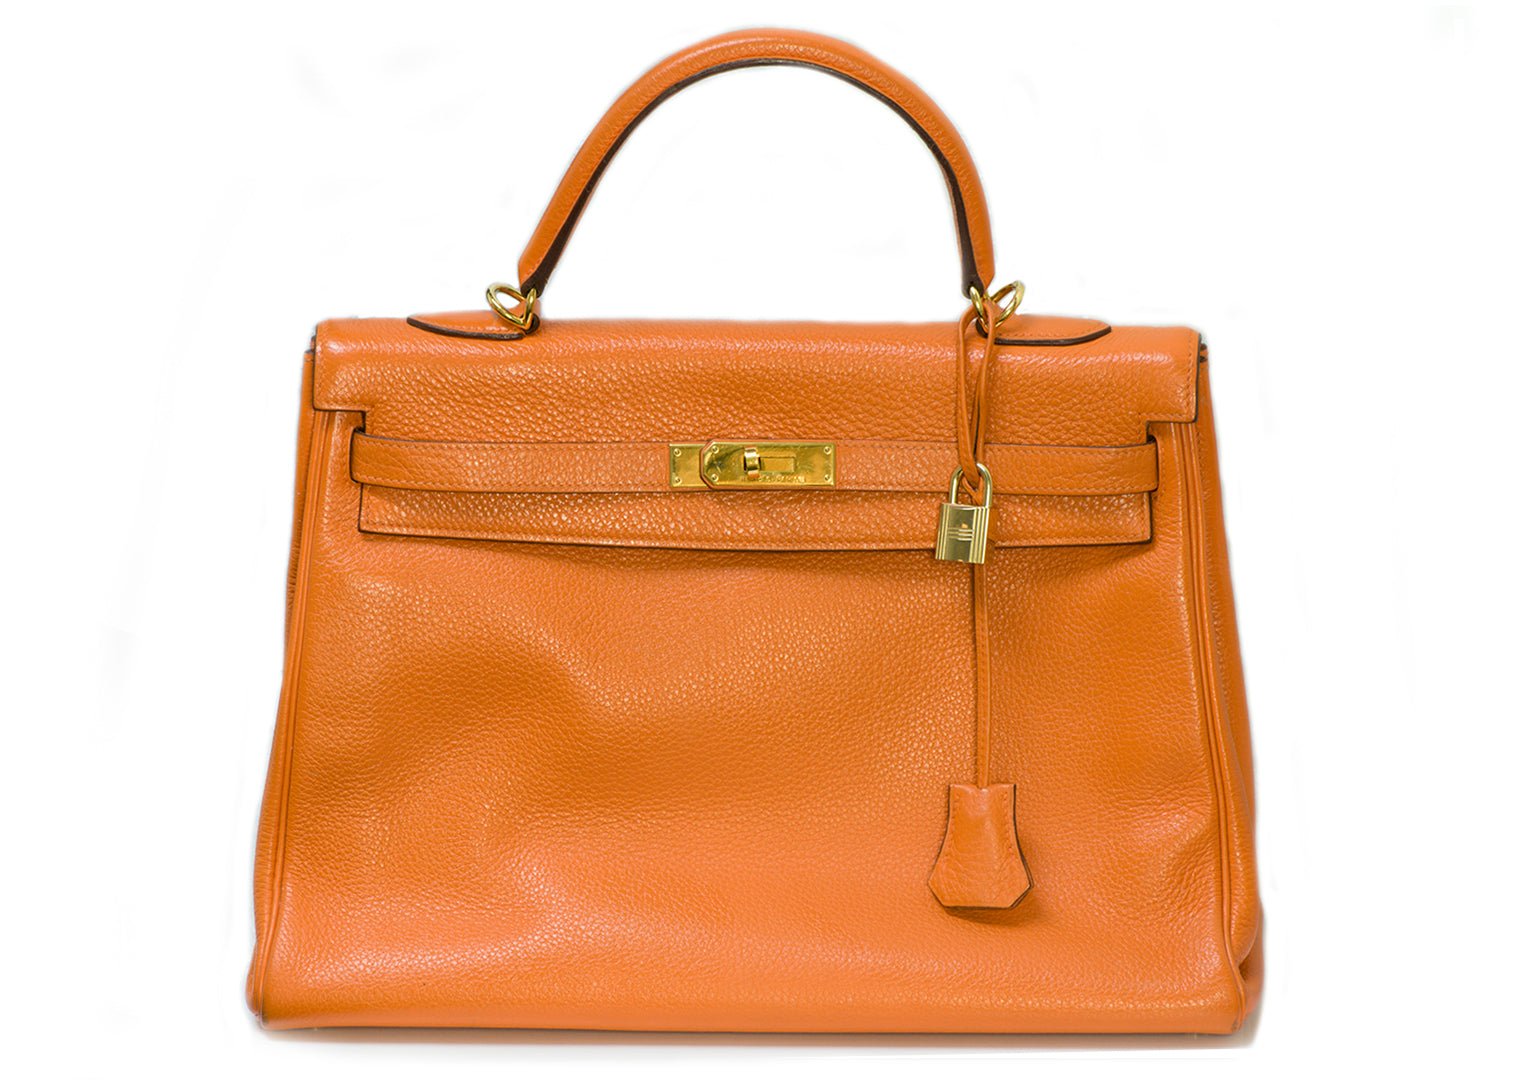 Hermes Orange Leather Kelly Bag